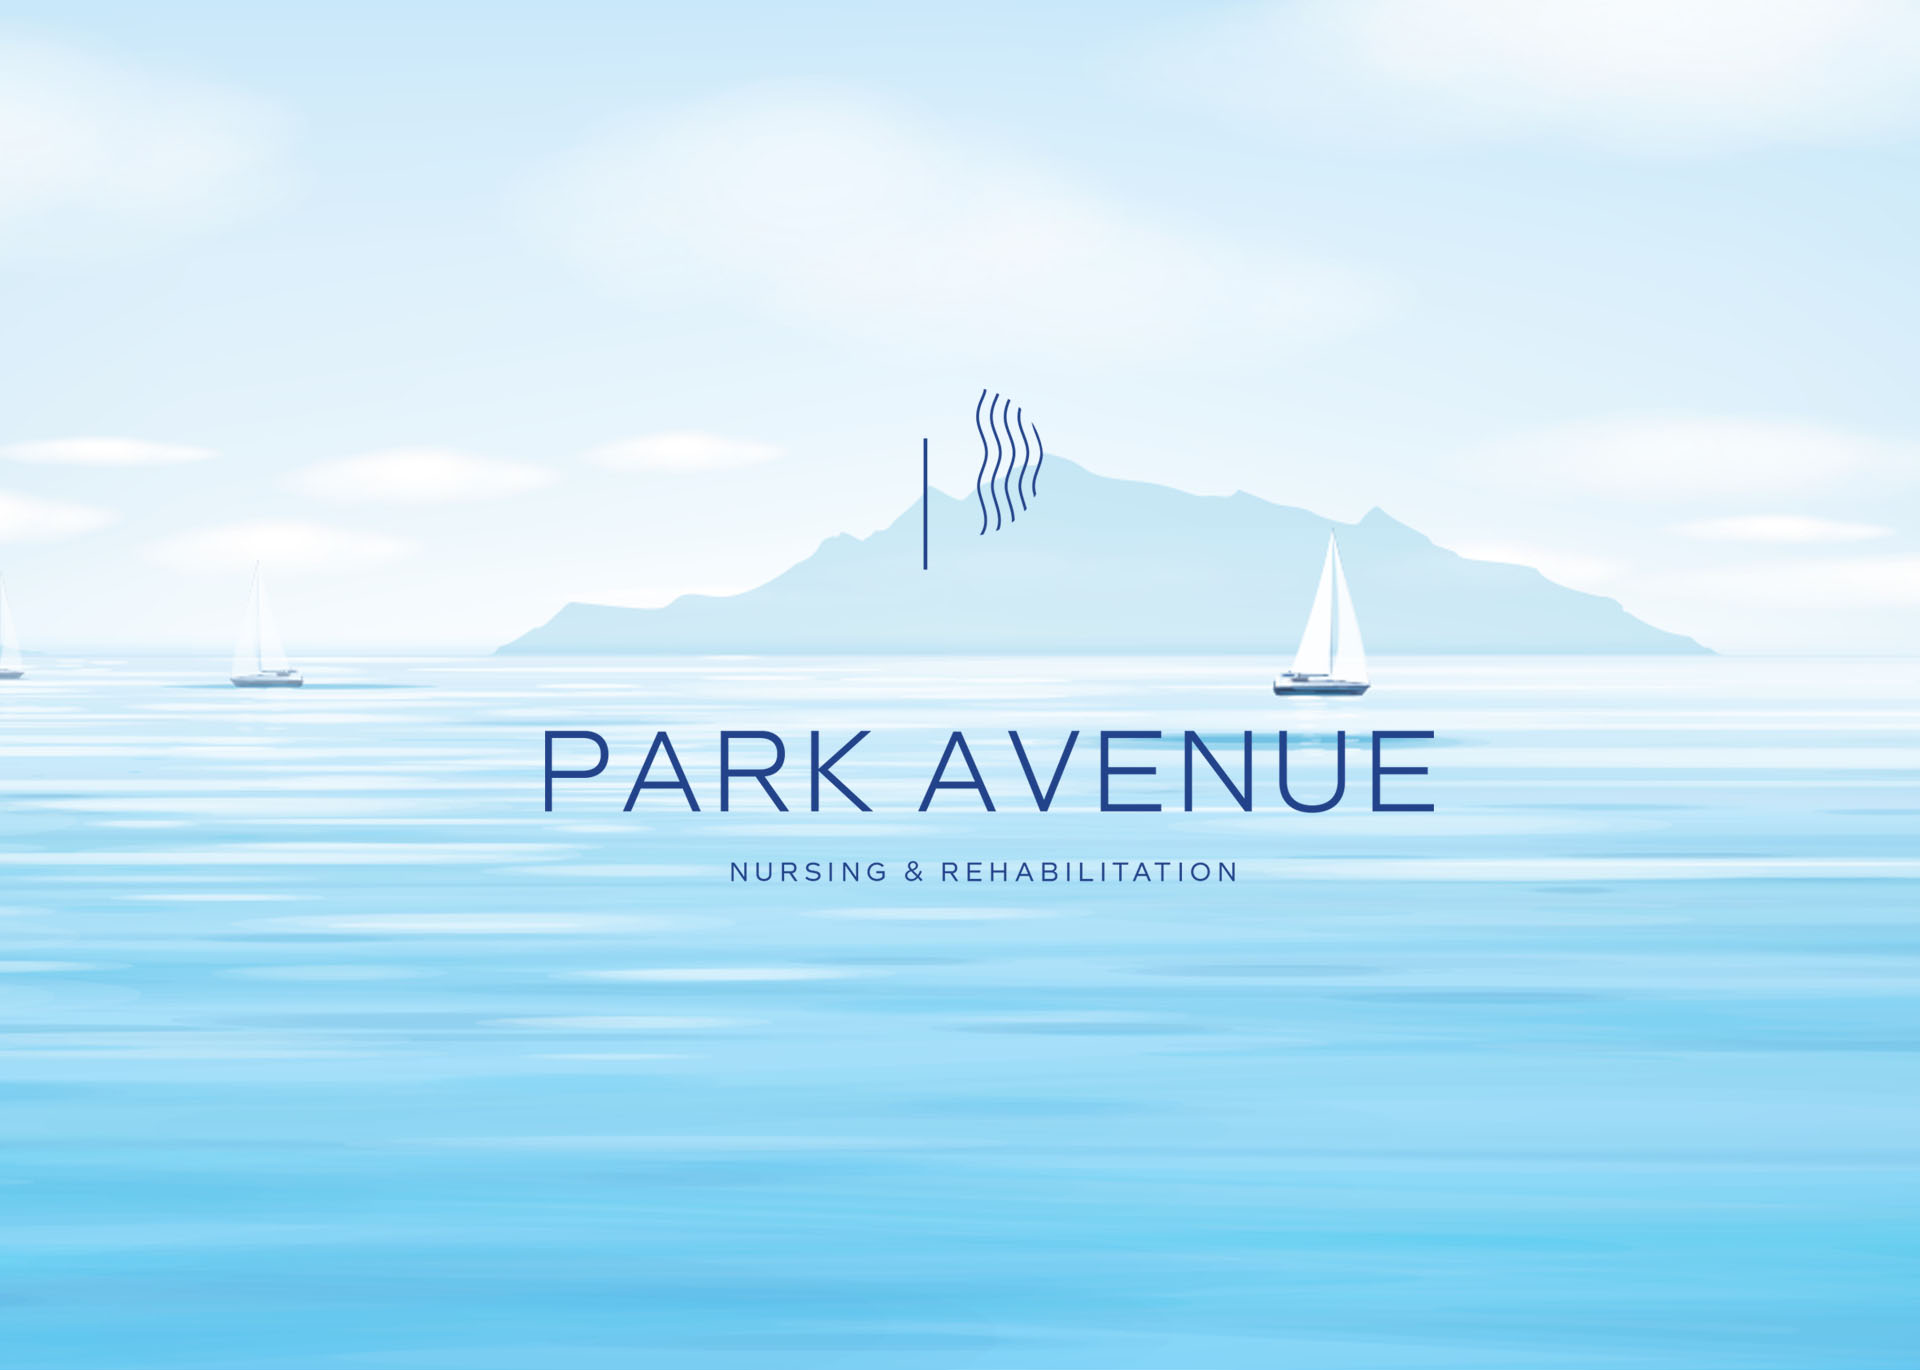 Park Avenue Nursing & Rehabilitation